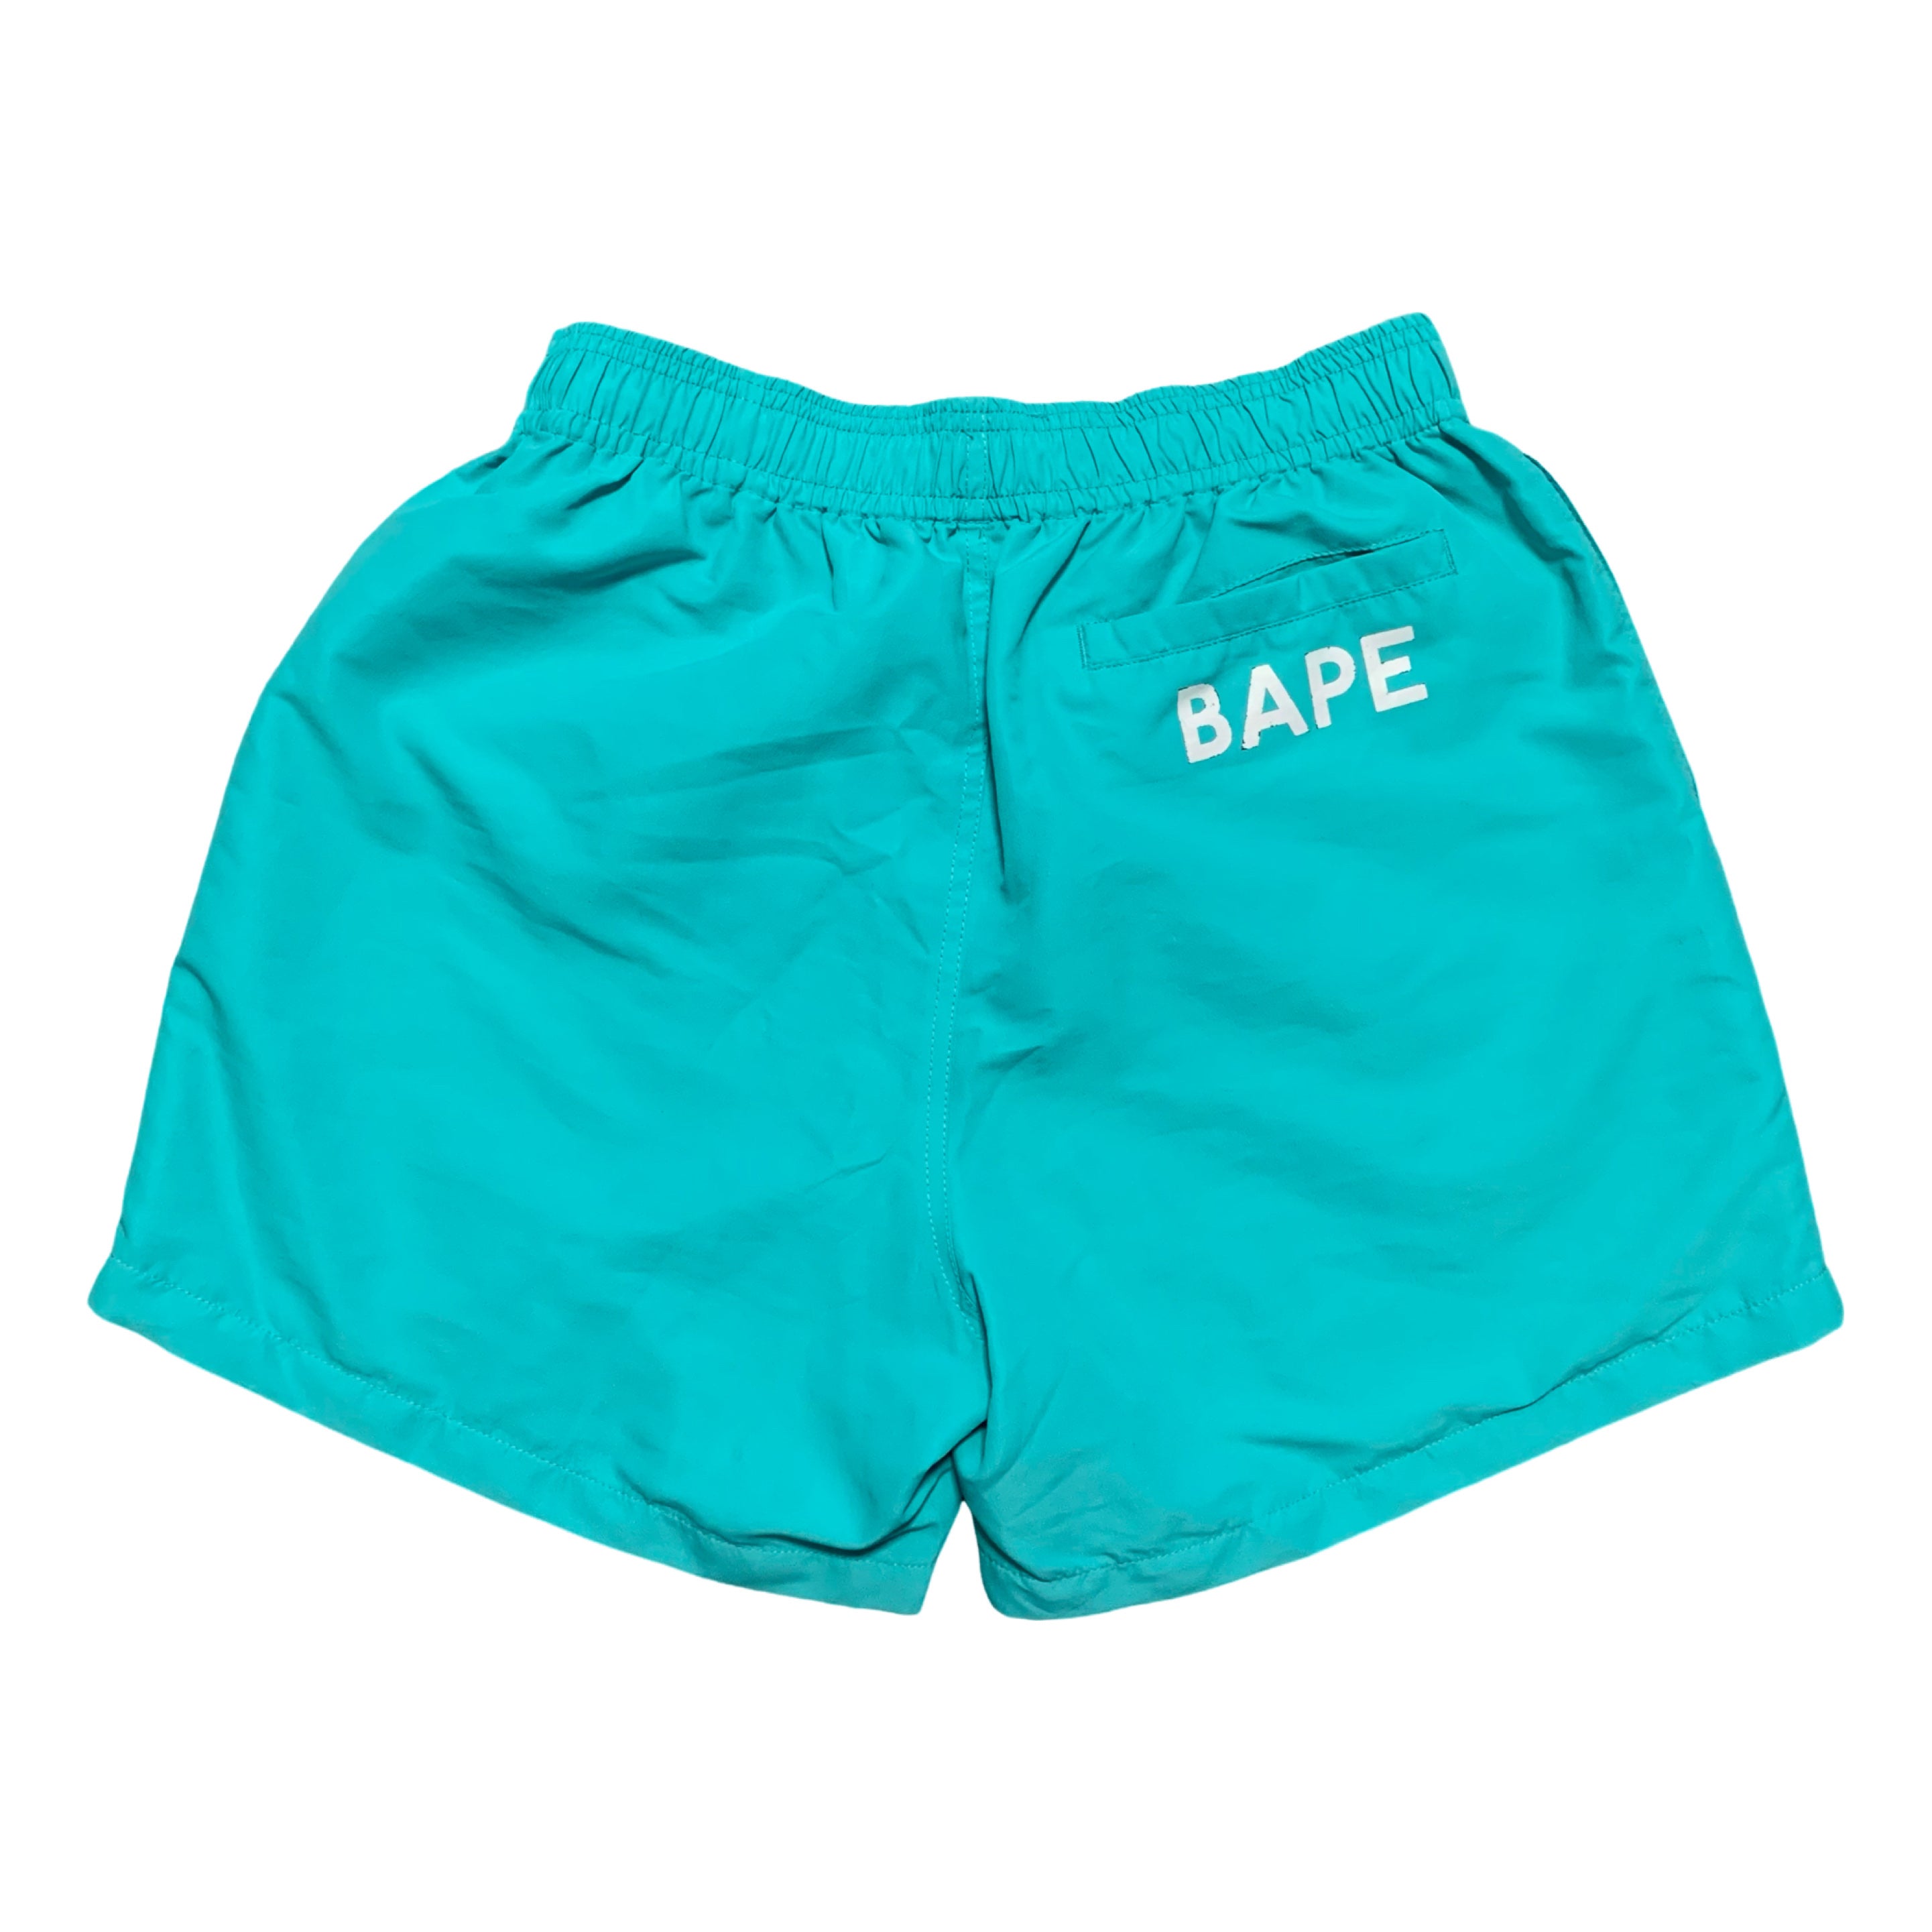 Bape Small Shorts Aqua Blue Beach Shorts Japan Exclusive Pack 2022